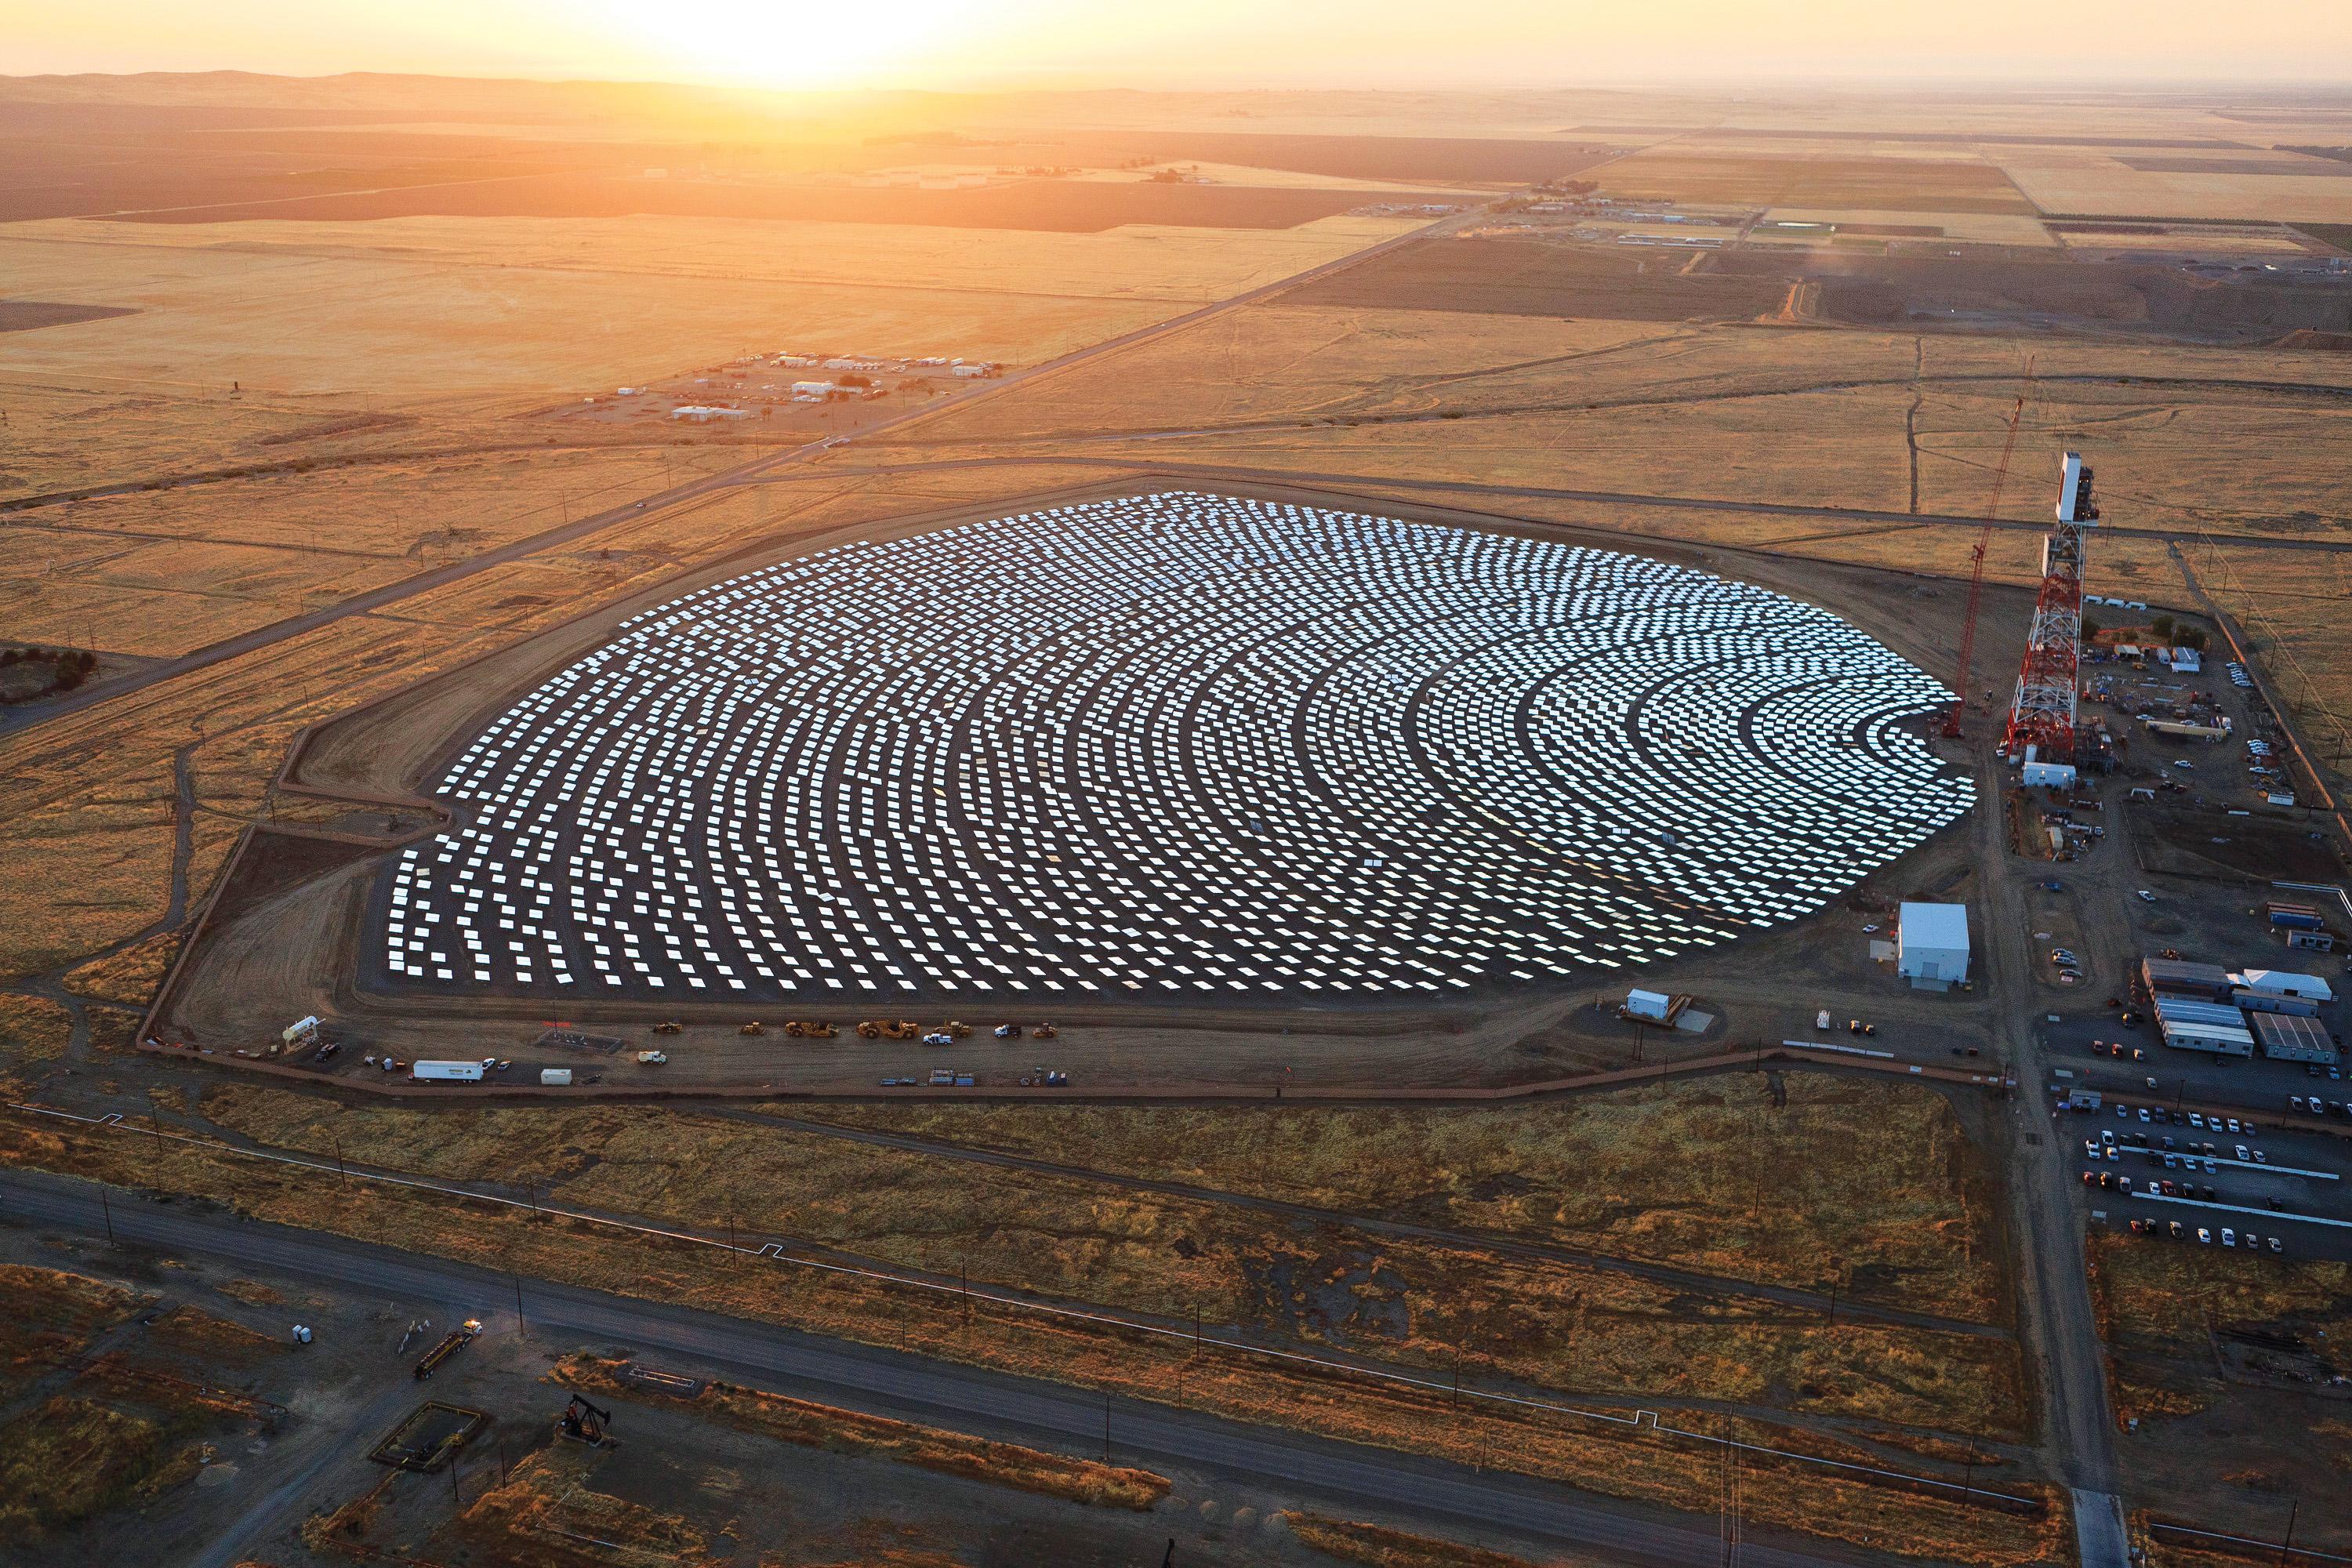  build world's largest solar power towers in California - Solar Tribune